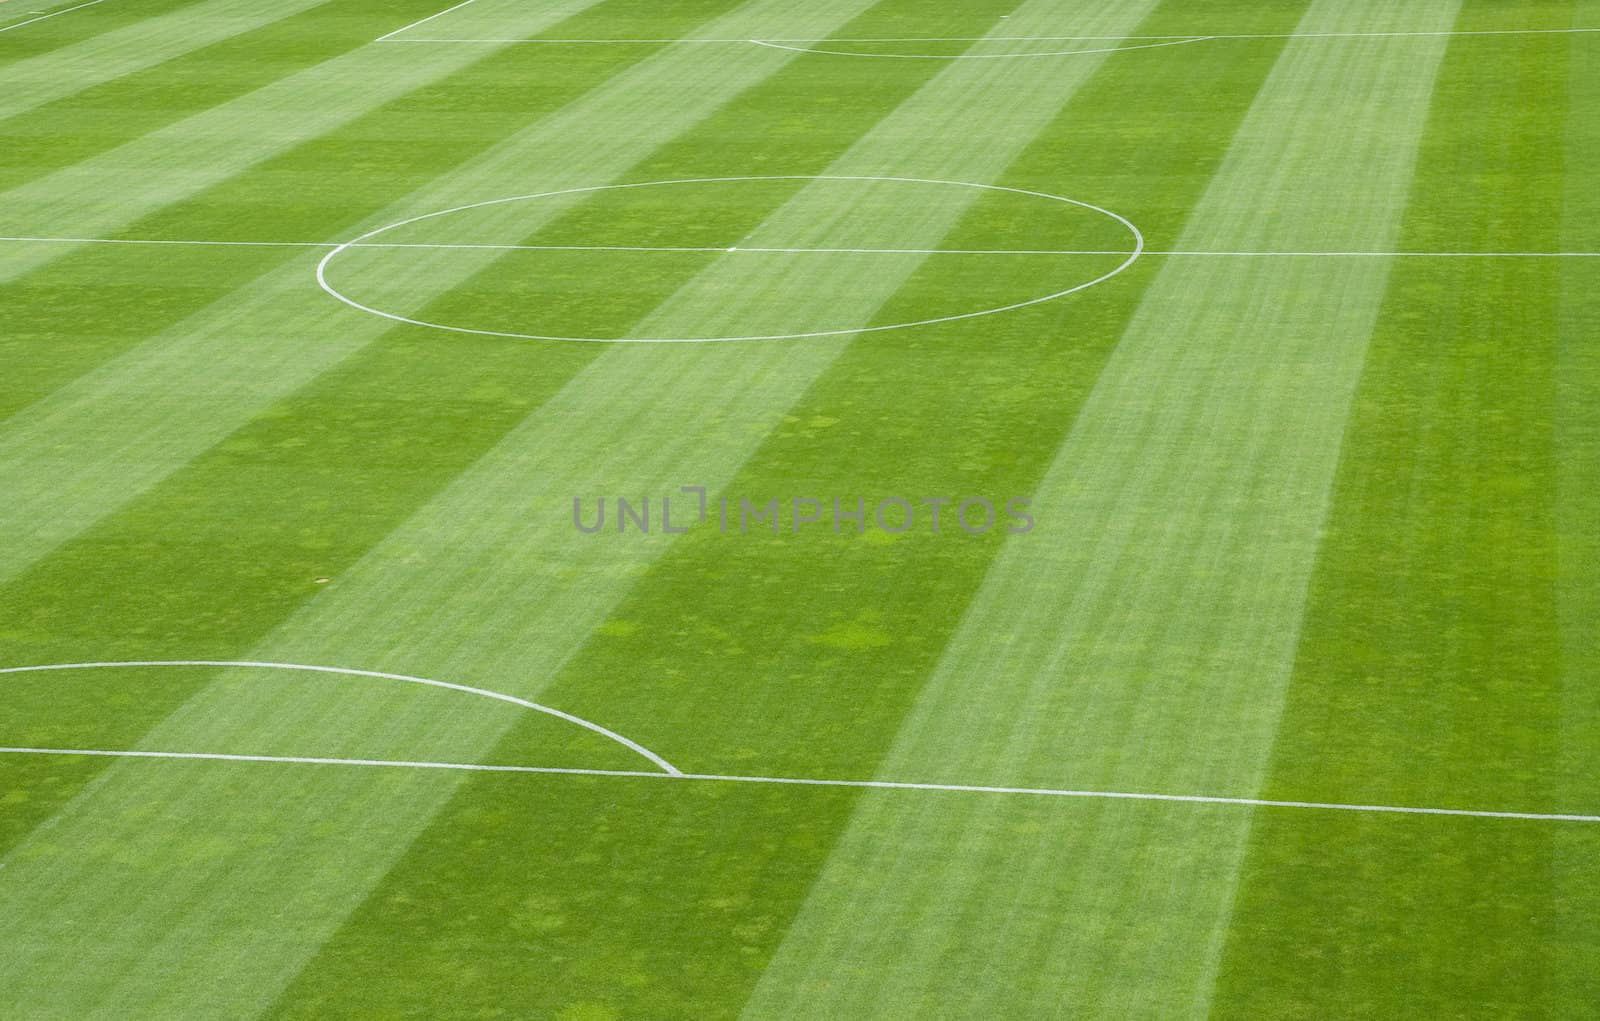 Detail of Soccer Field Grass in a Stadium